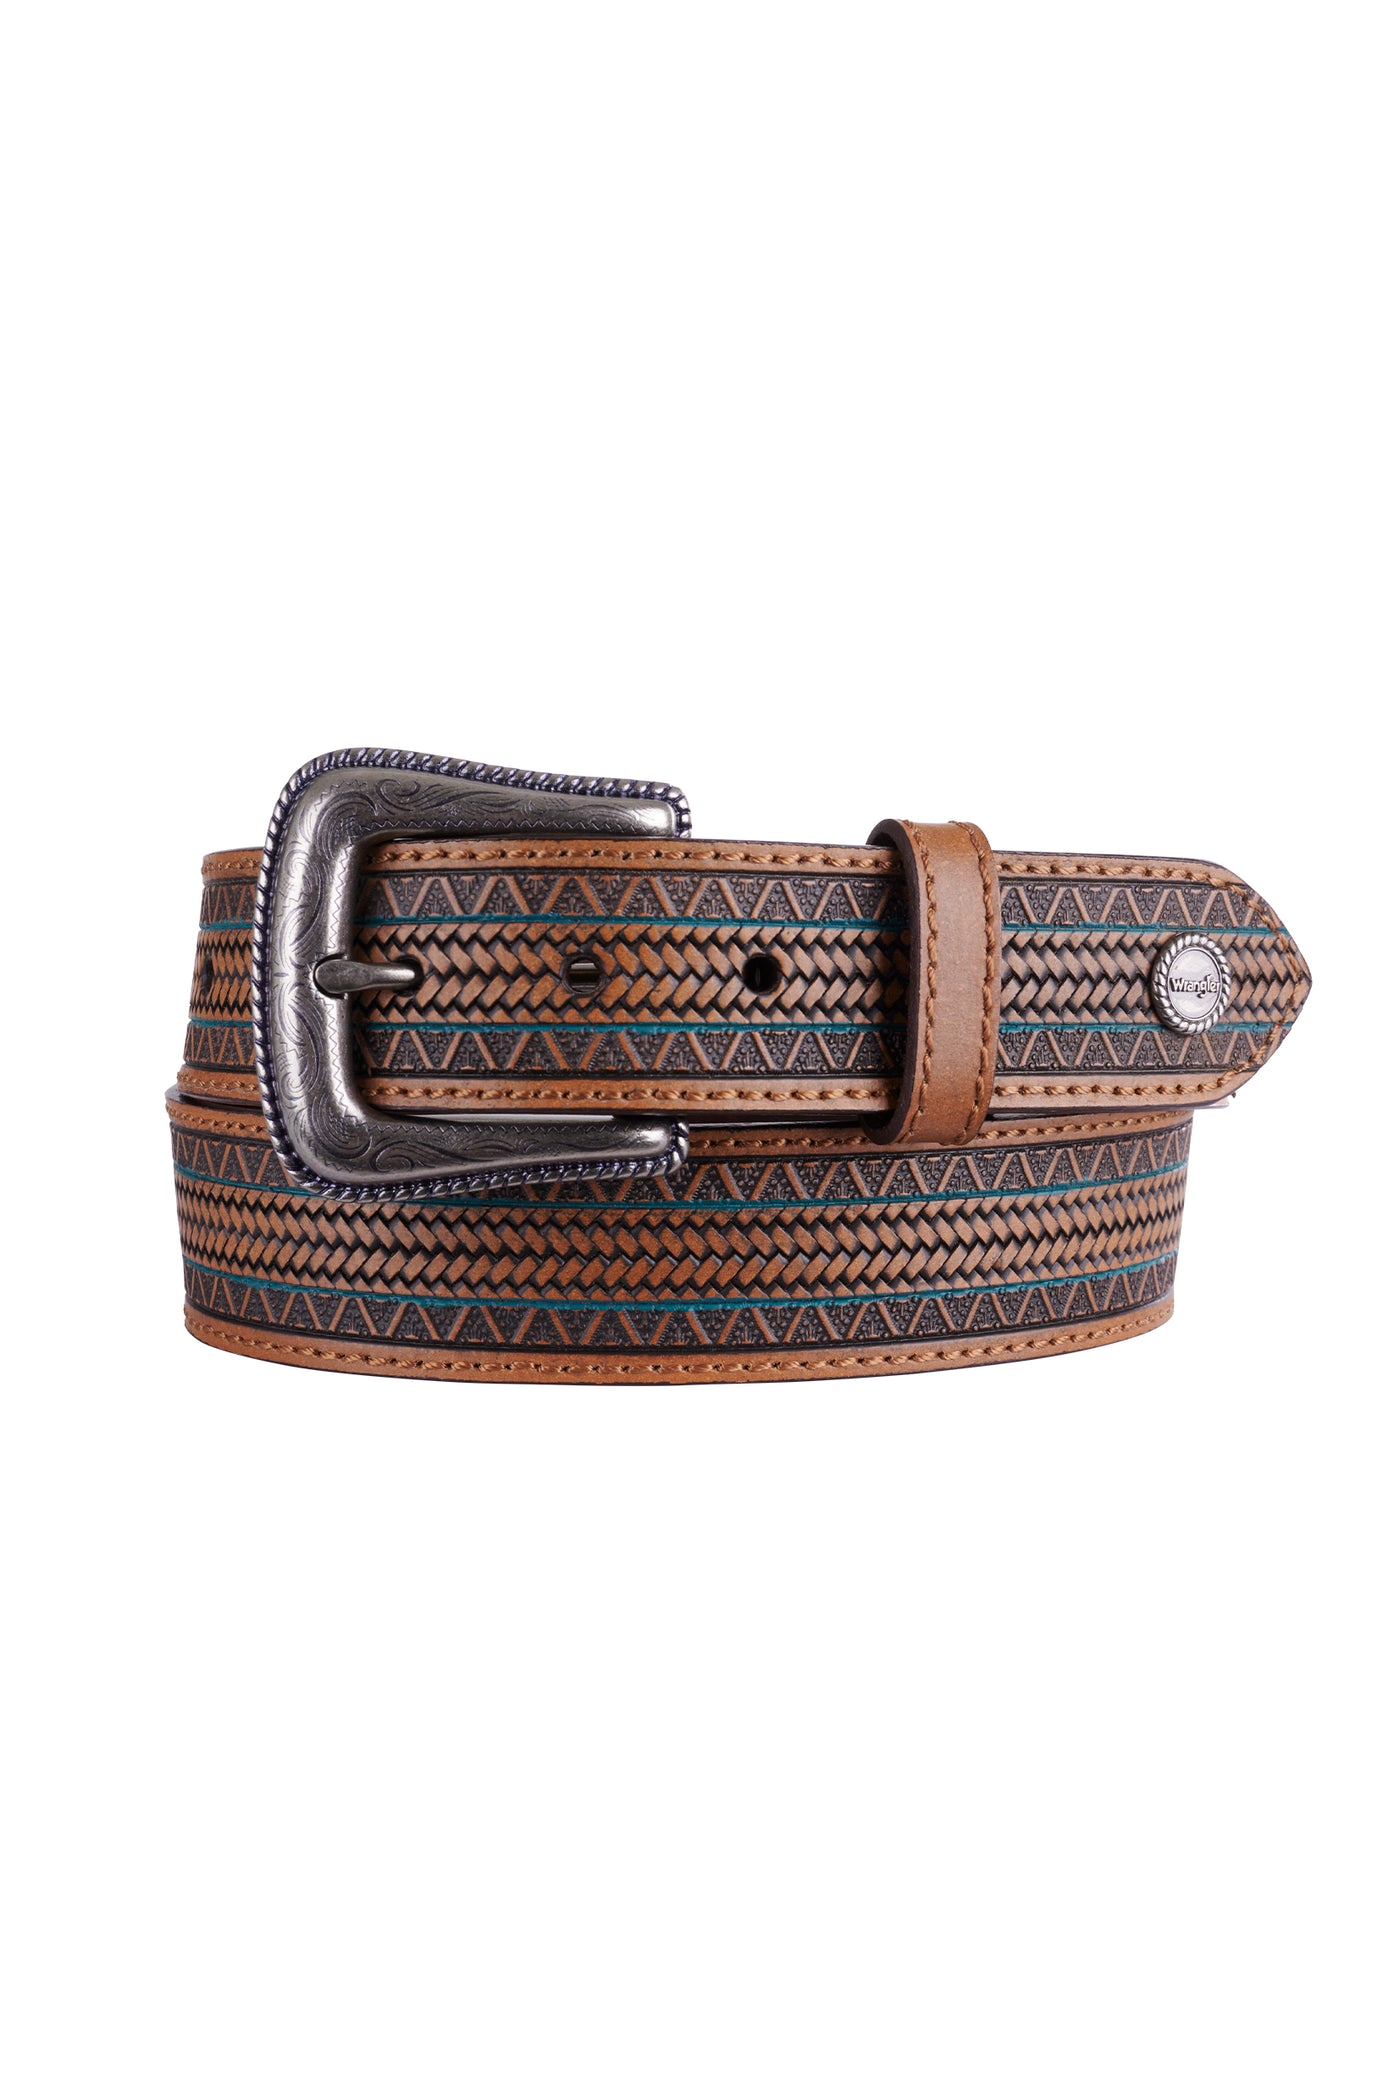 Wrangler Reece Tan Leather Belt